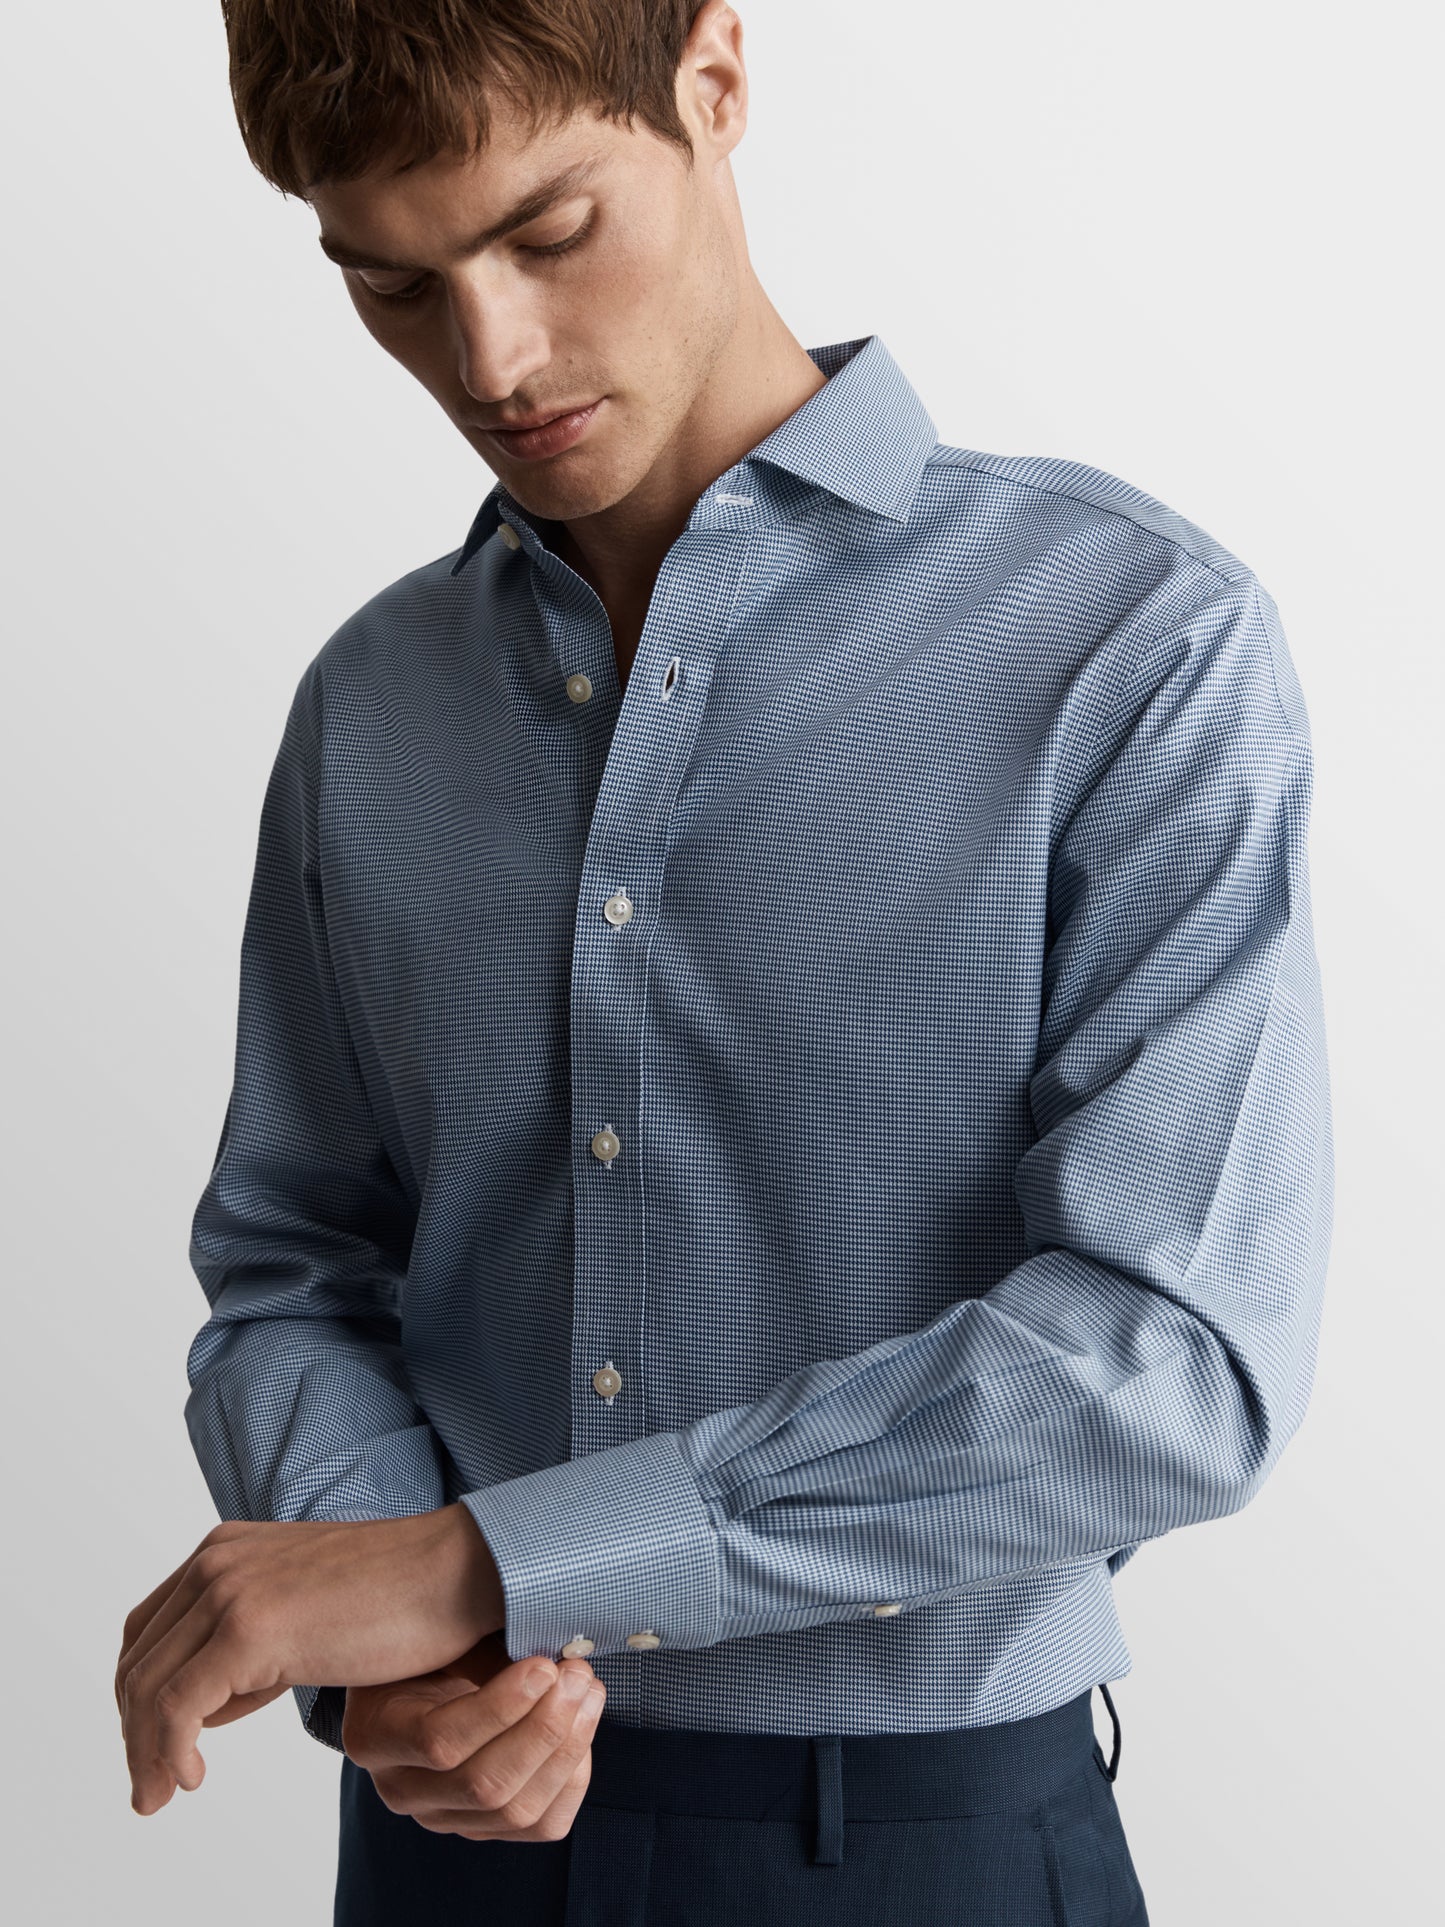 Image 1 of Non-Iron Navy Blue Mini Dogtooth Plain Weave Slim Fit Single Cuff Classic Collar Shirt